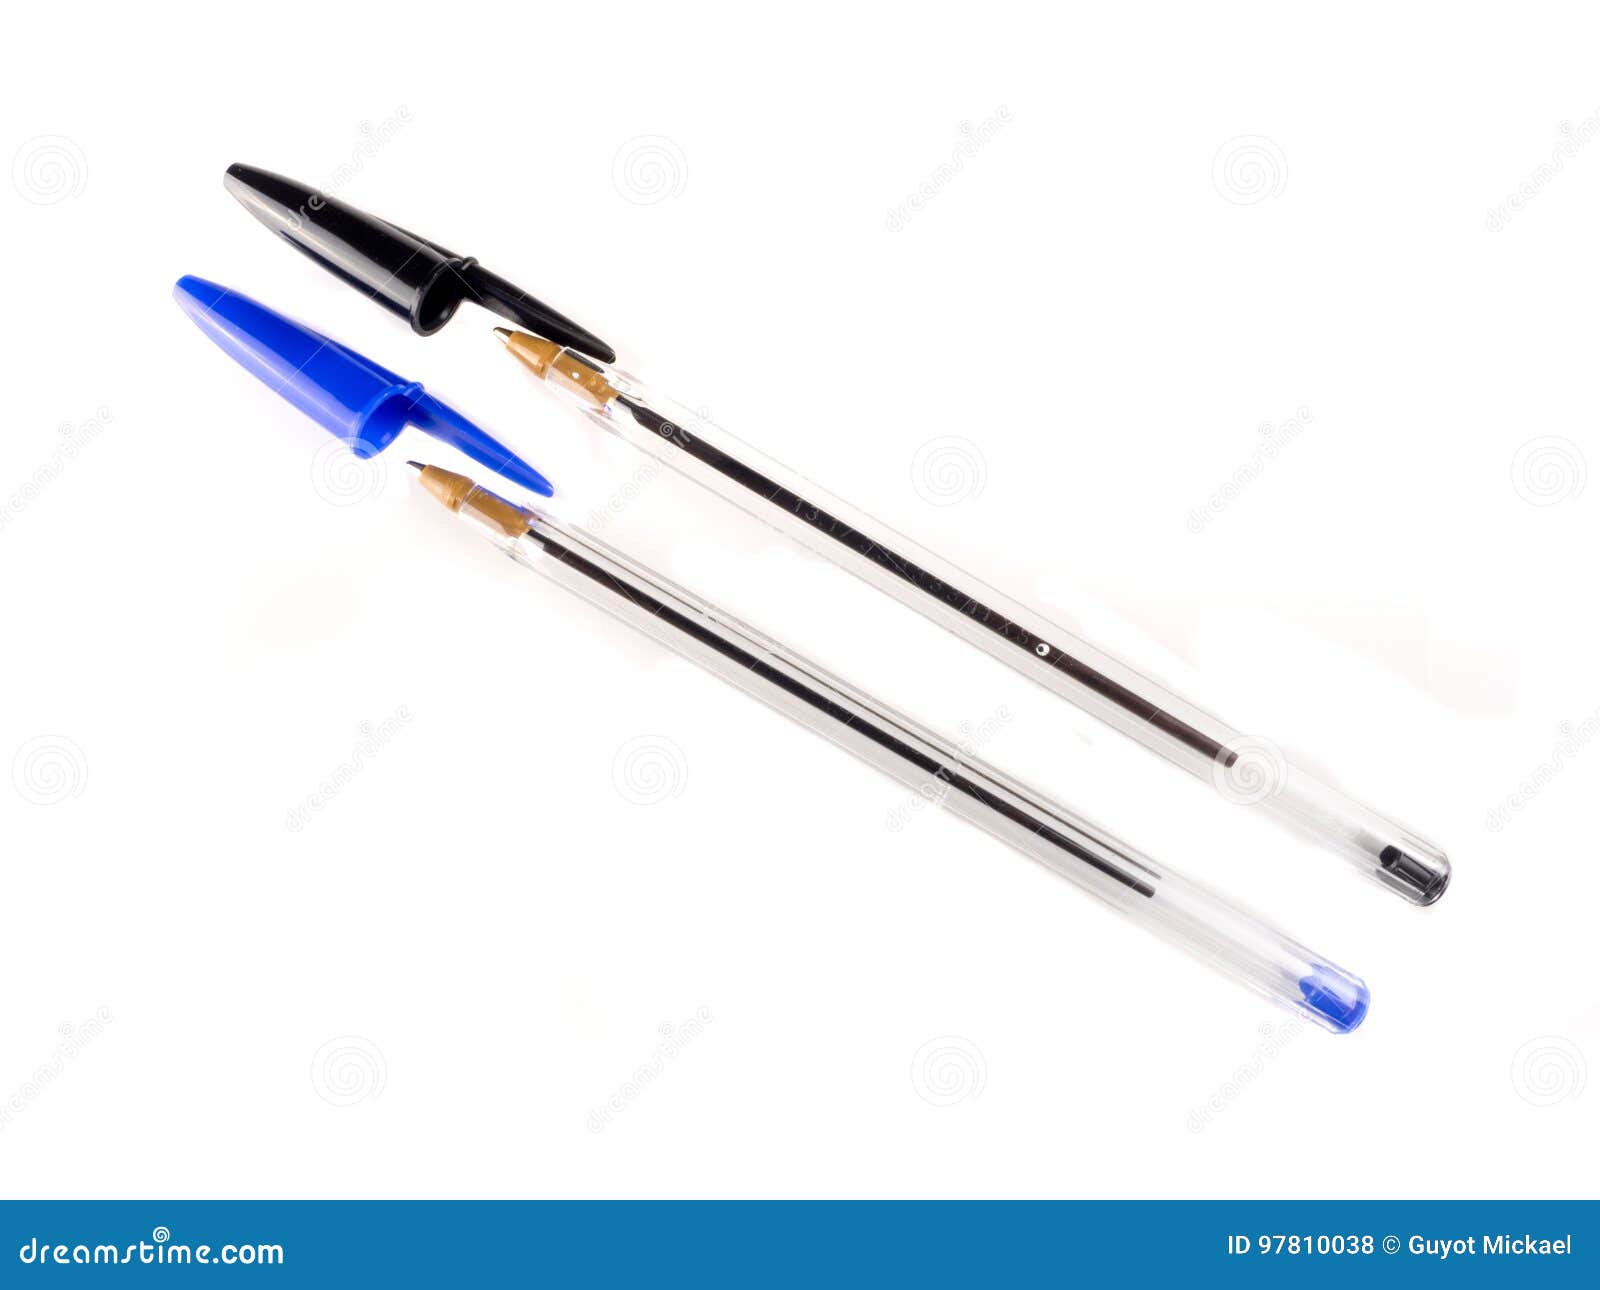 Blue White and Black Compson Pen